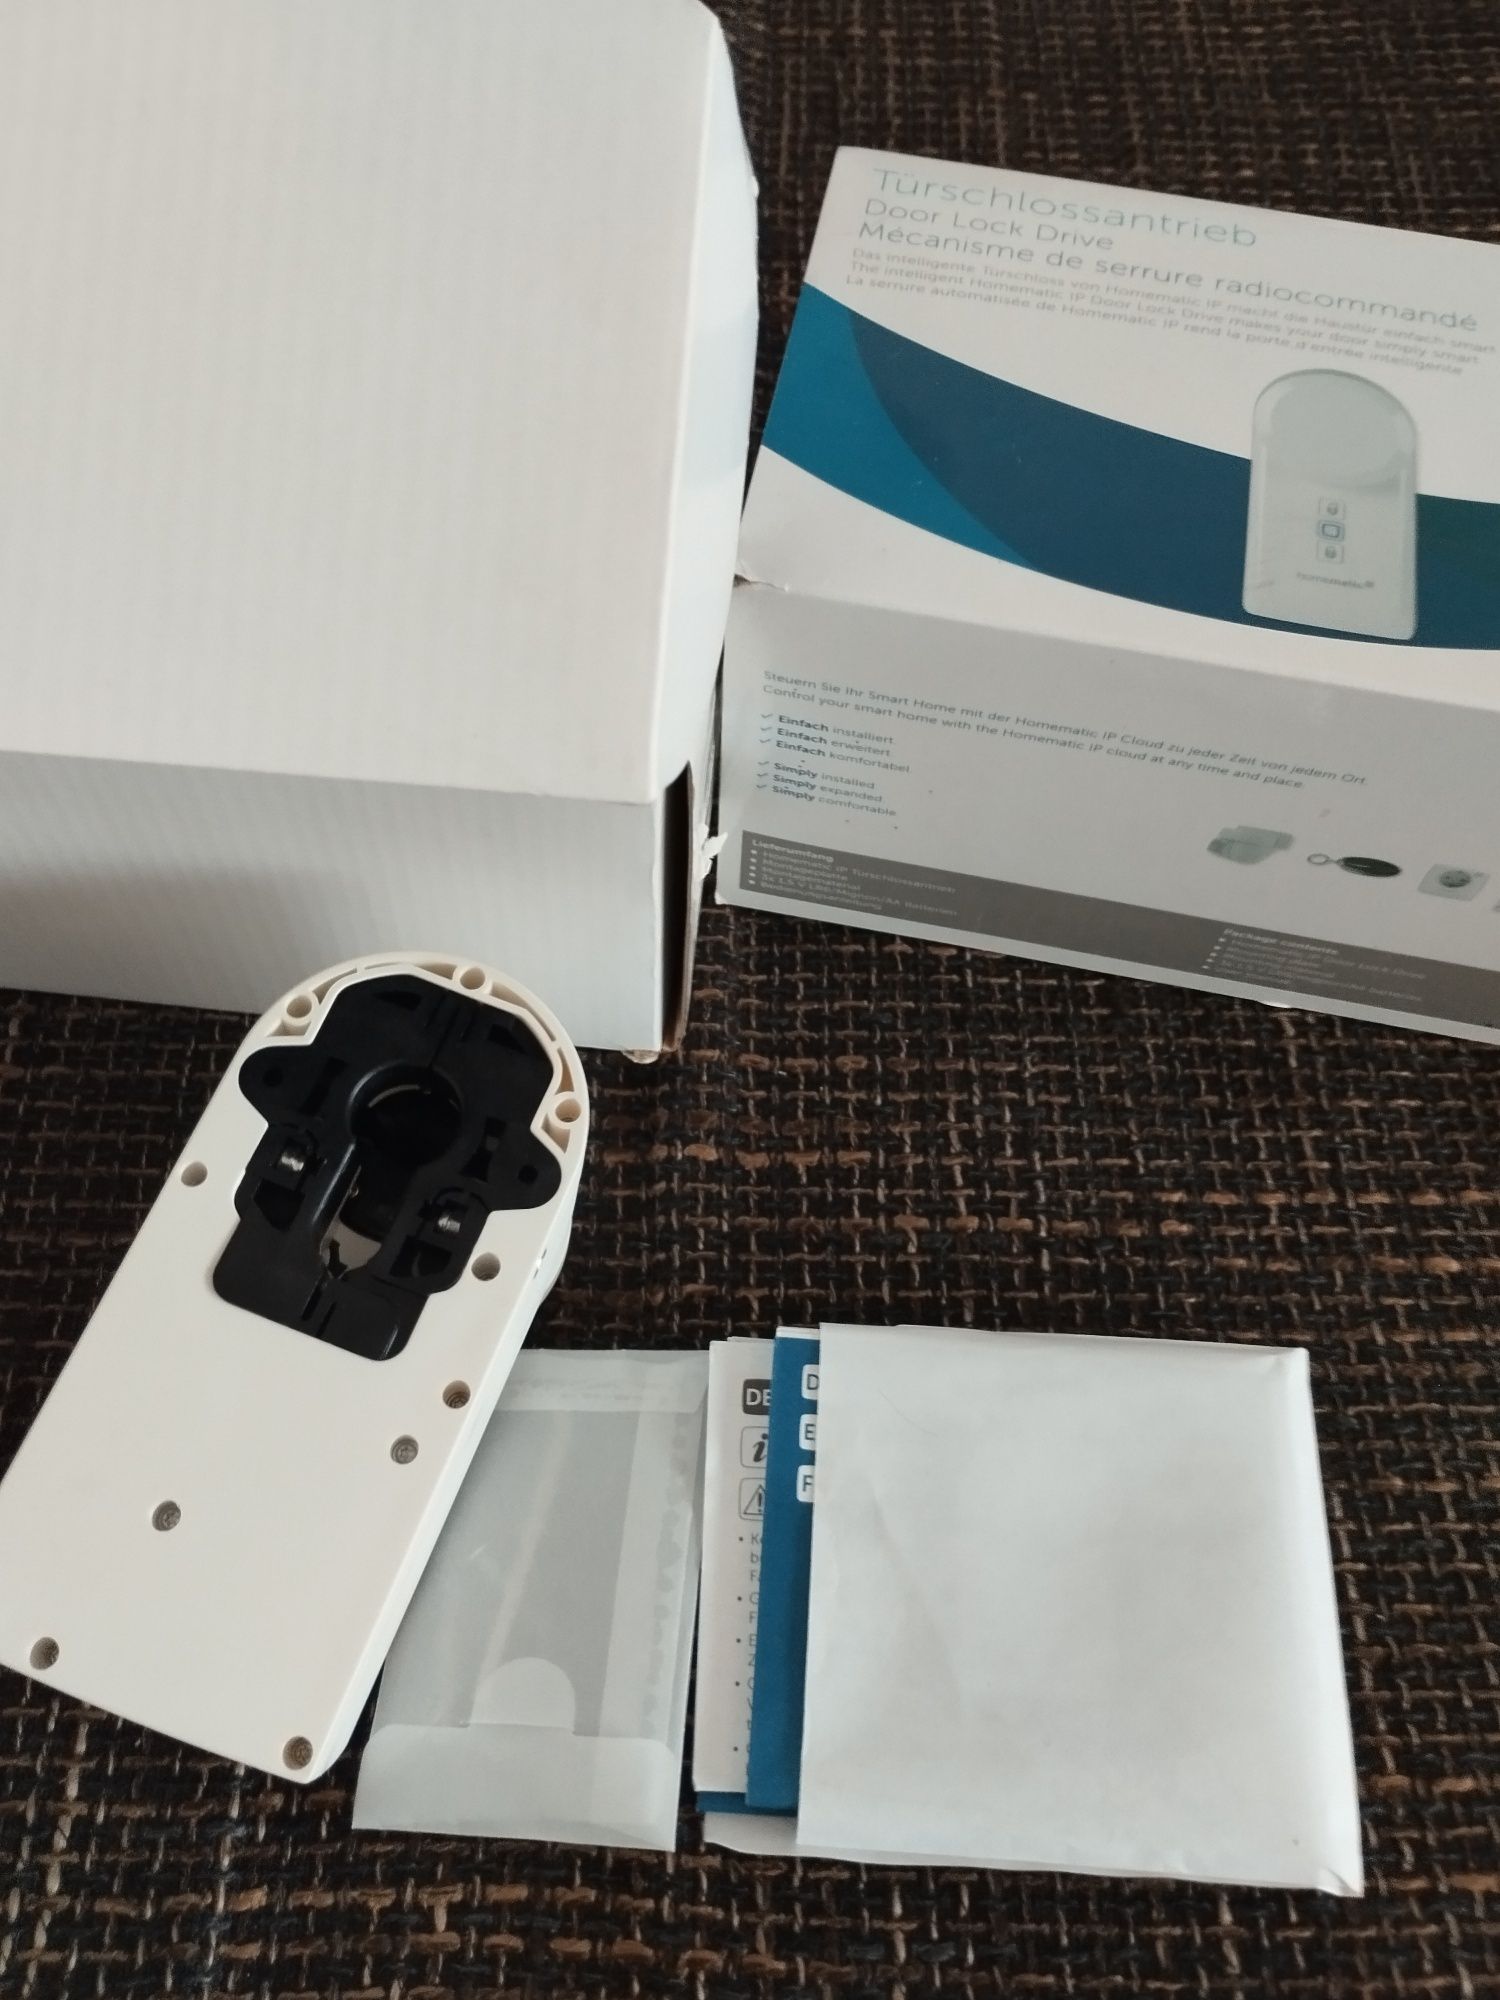 Homematic IP HmIP-DLD Blocare uși Drive Wireless Smart Home, alb